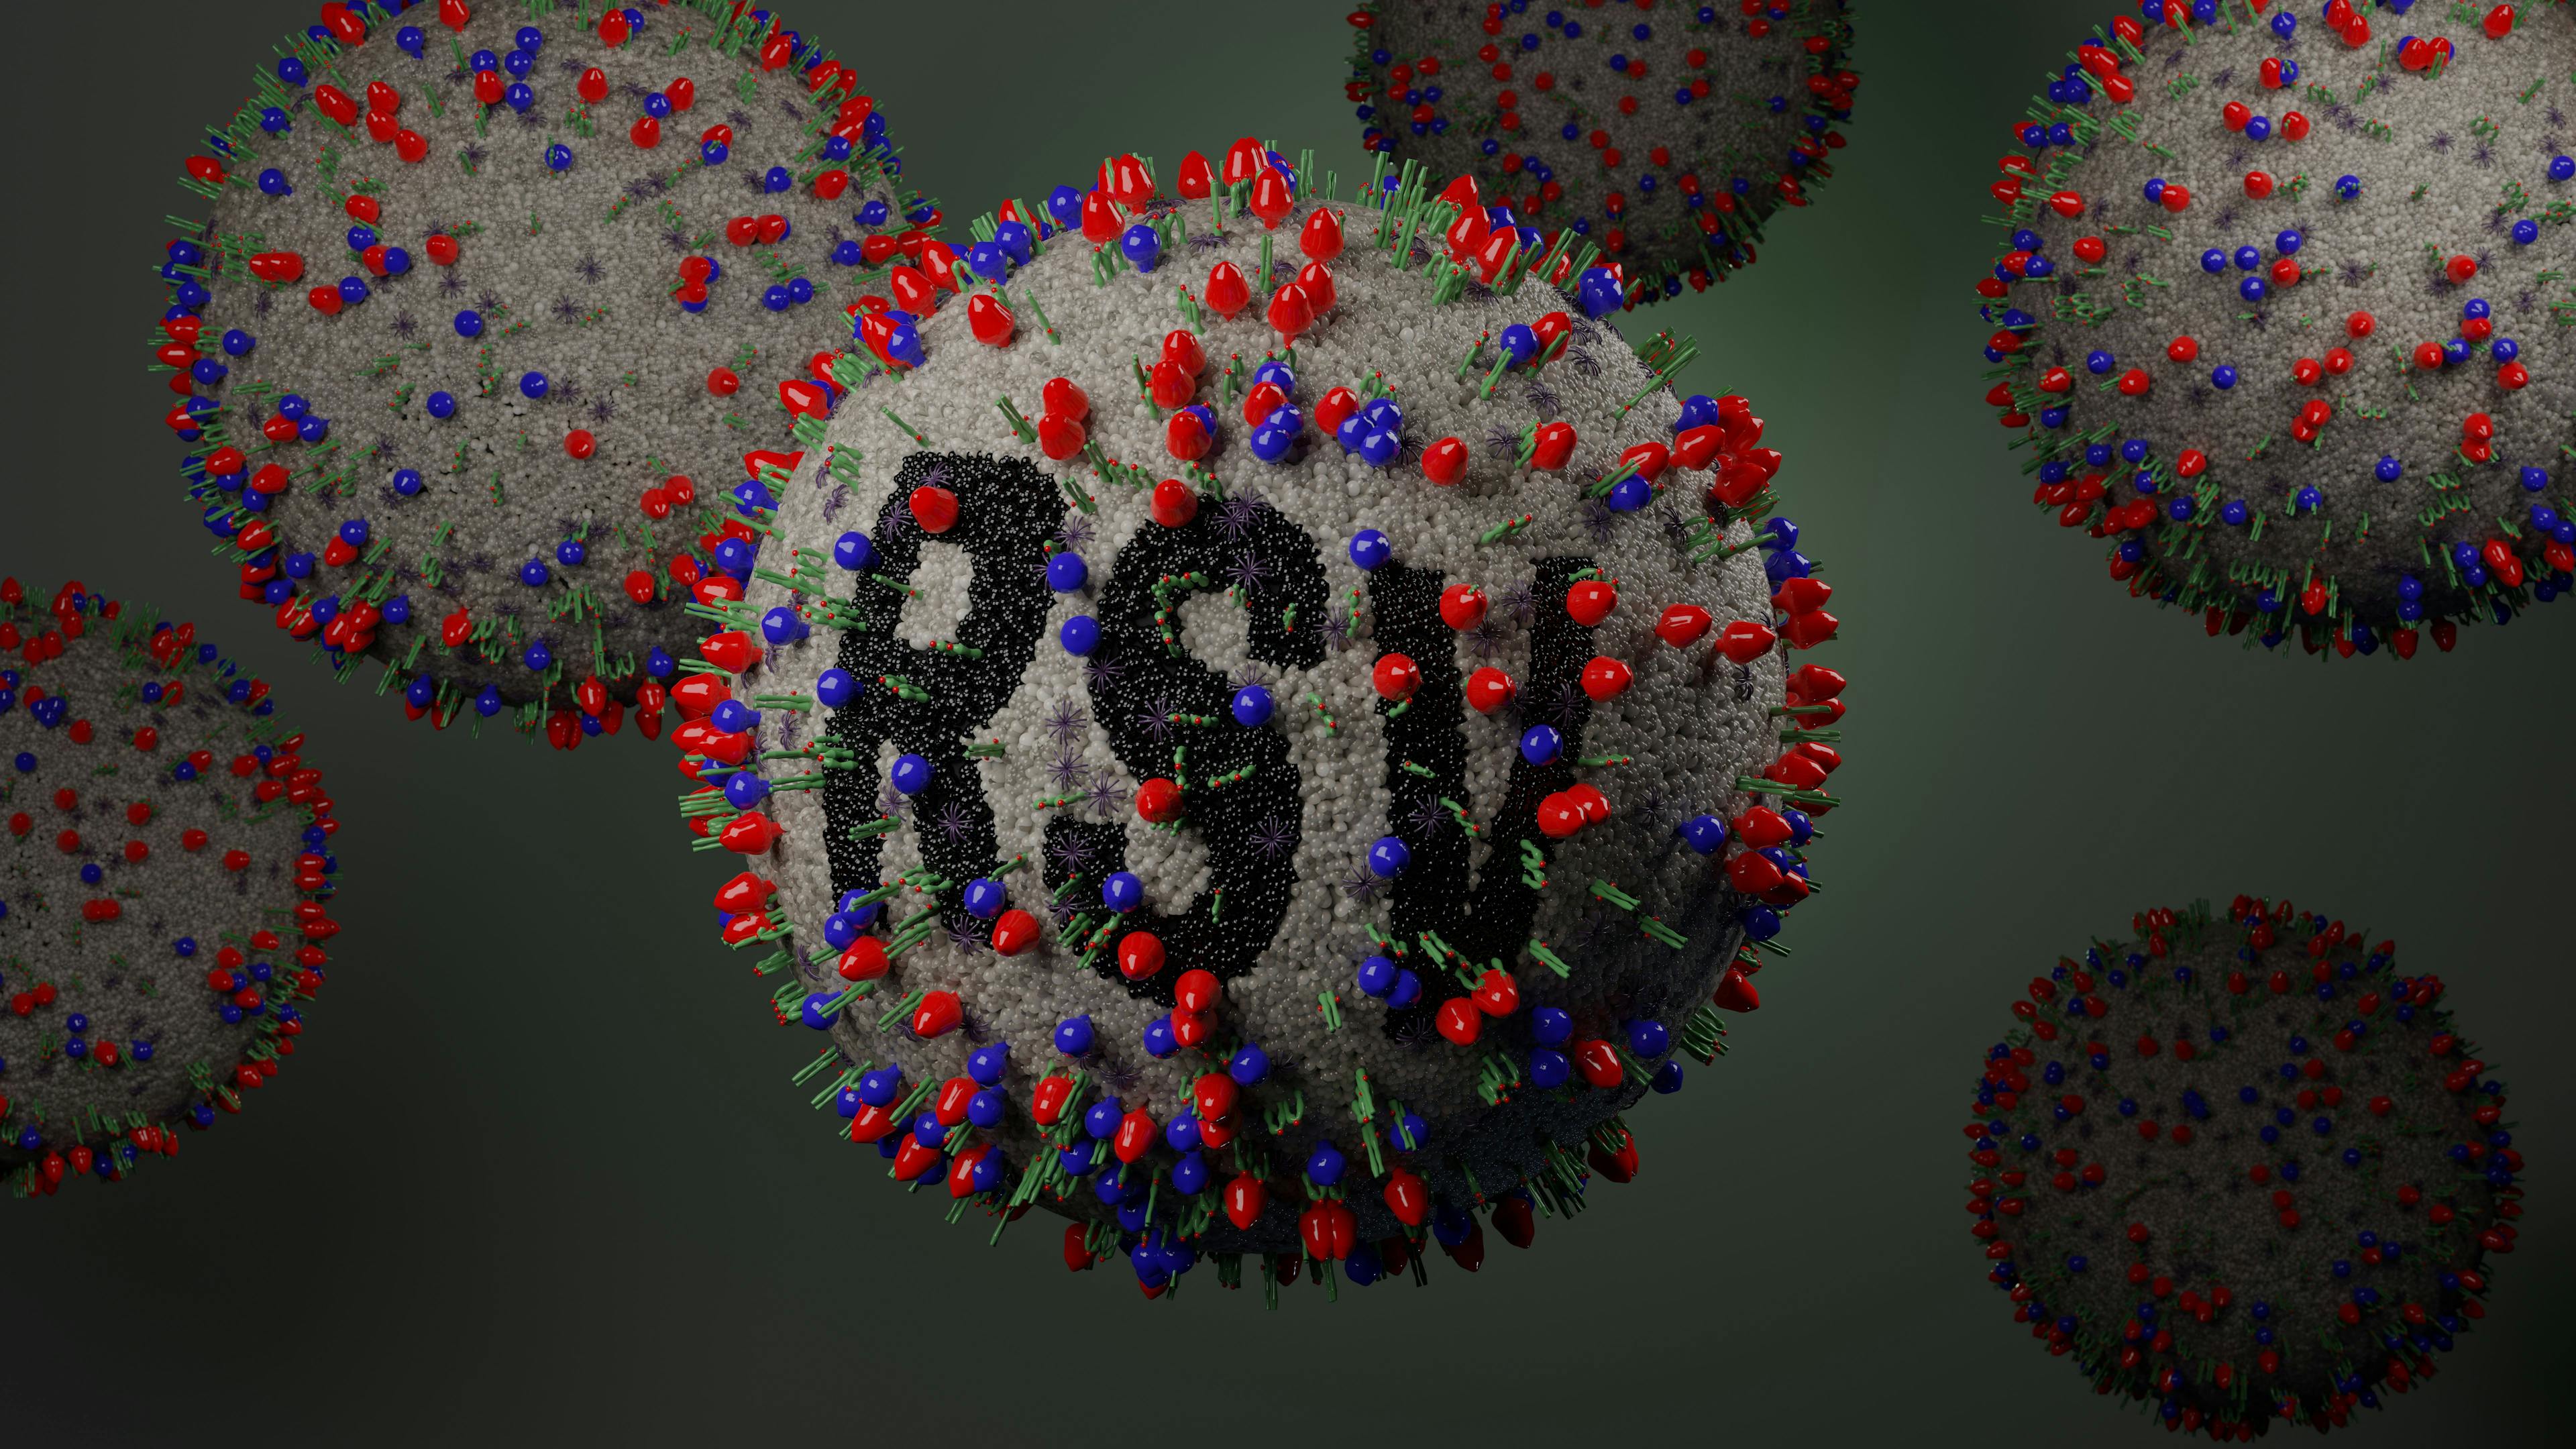 Illustration of Respiratory Syncytial Virus or RSV | Image Credit: Peter Hansen - stock.adobe.com